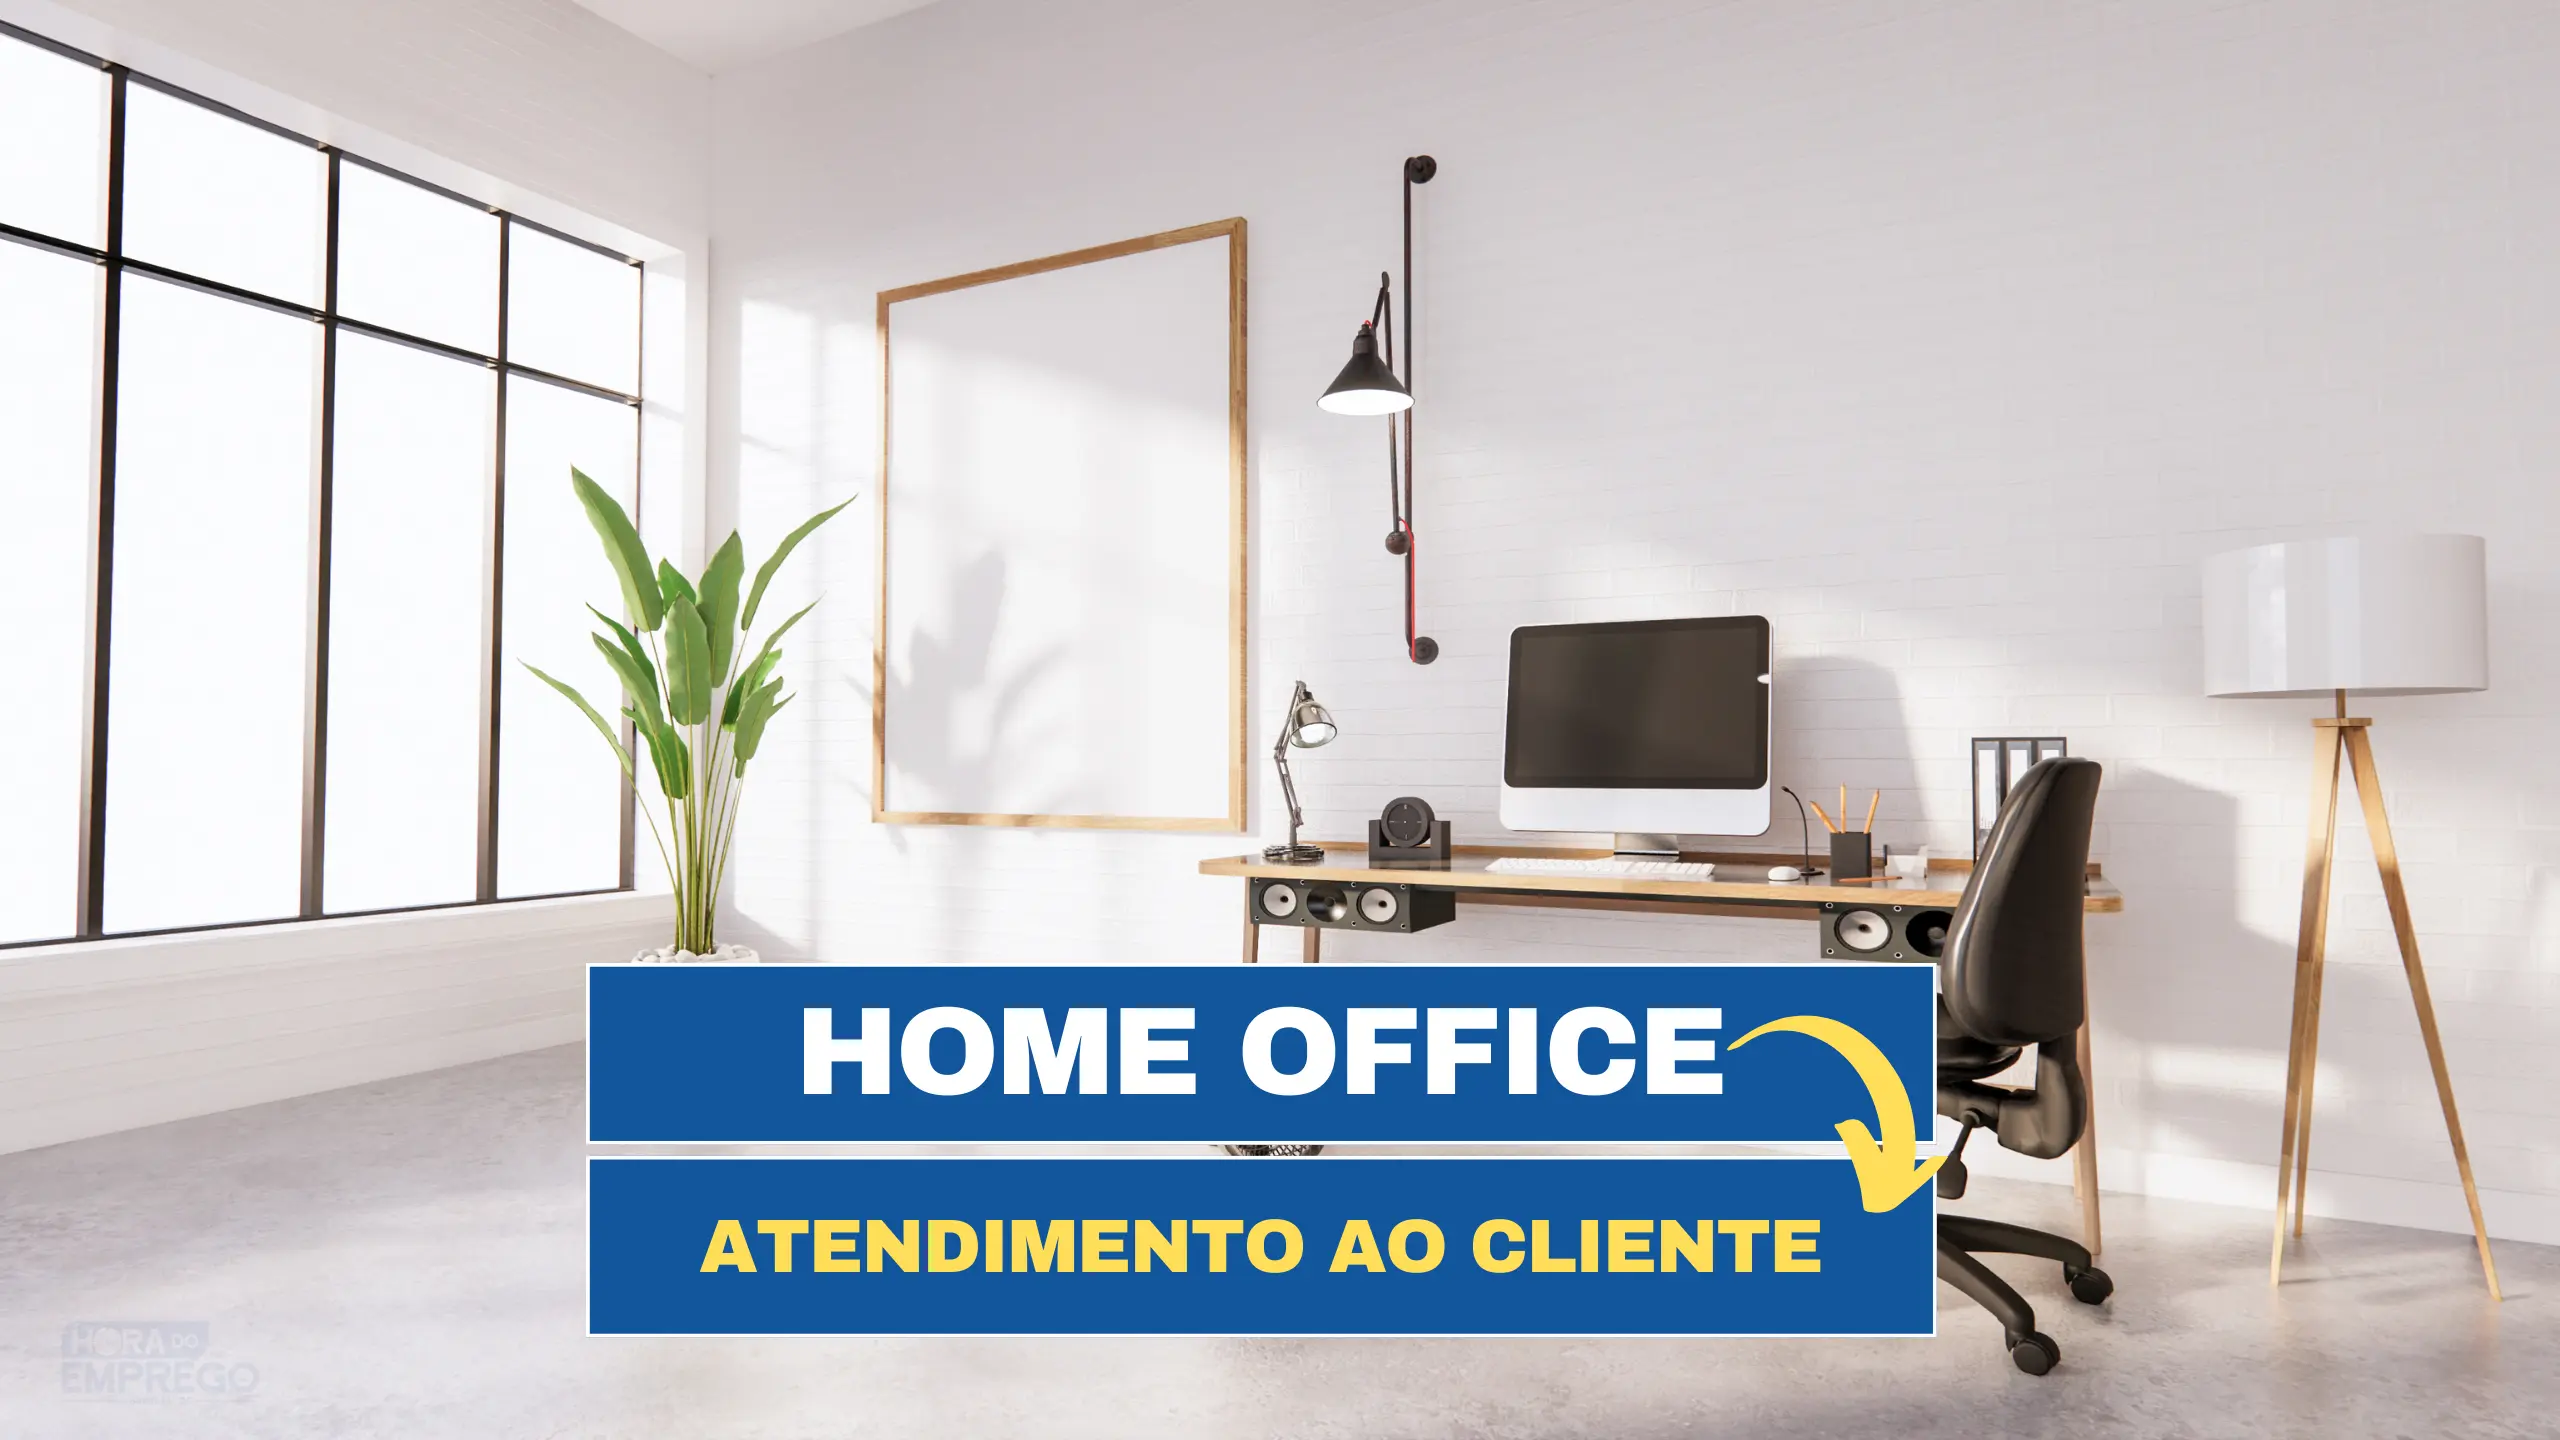 Home Office: Vaga para Atendimento ao cliente HOME OFFICE com Auxílio Home Office, salário e 20 opções de Benefícios